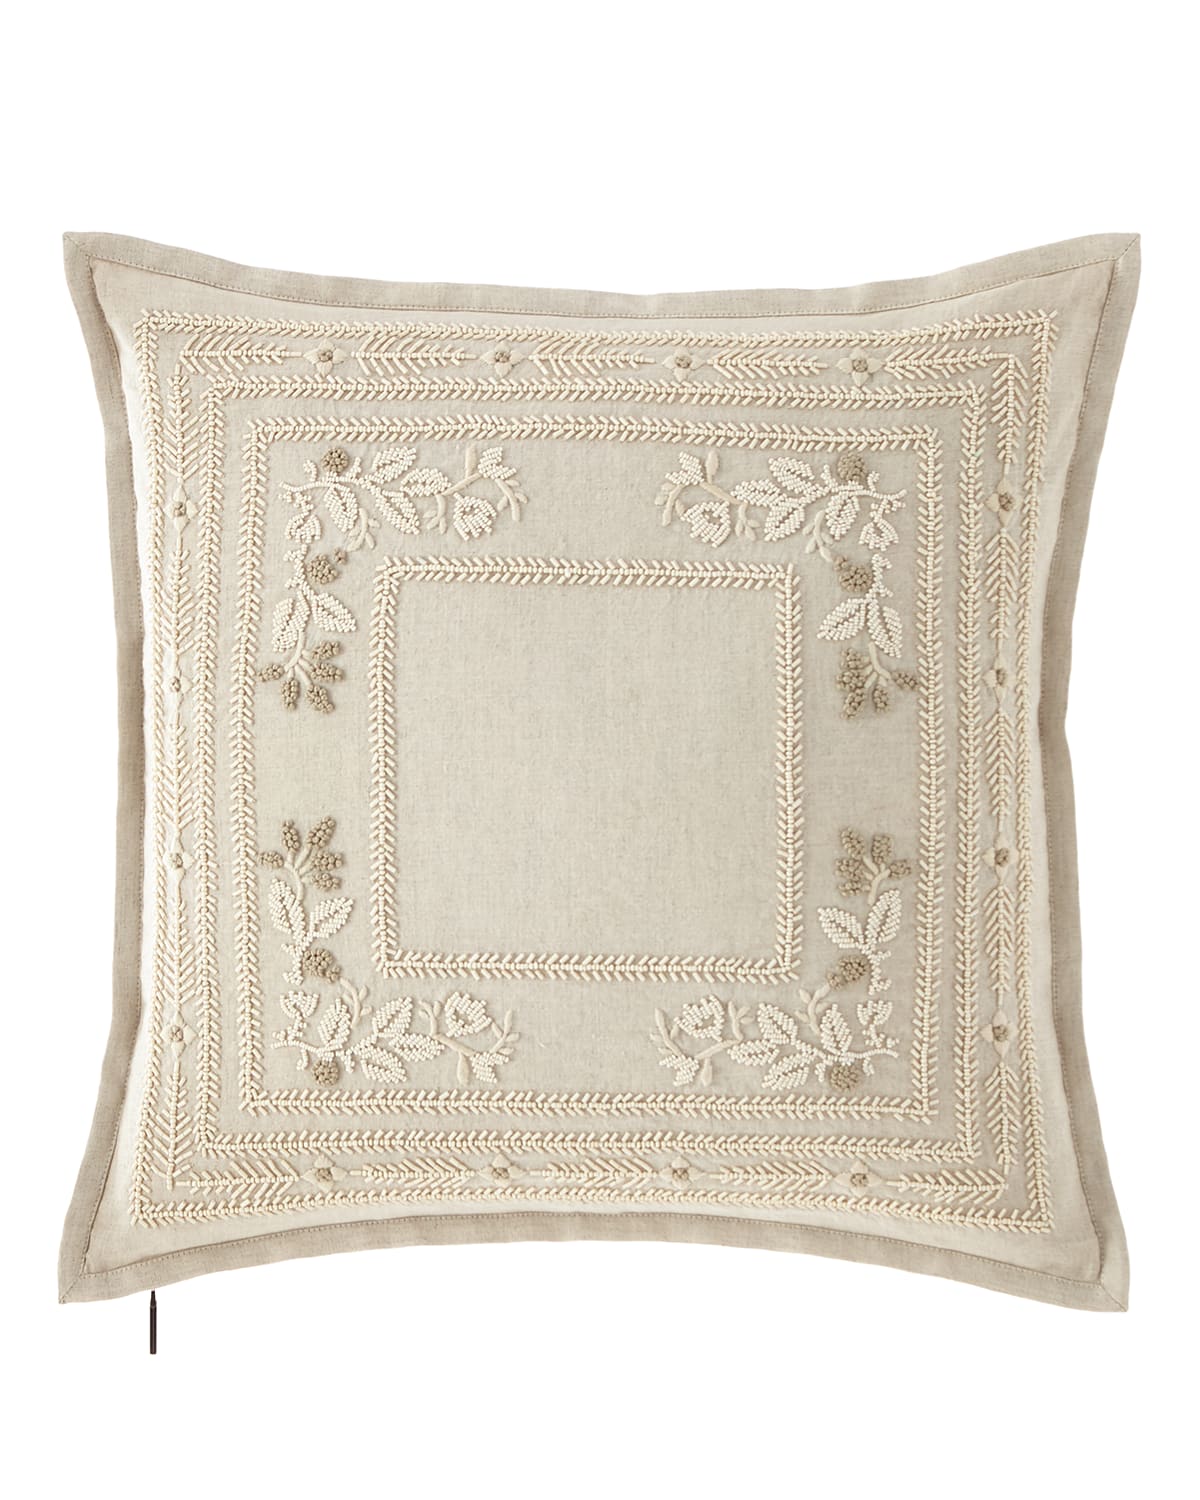 Image Ralph Lauren Home Sibyll Decorative Pillow